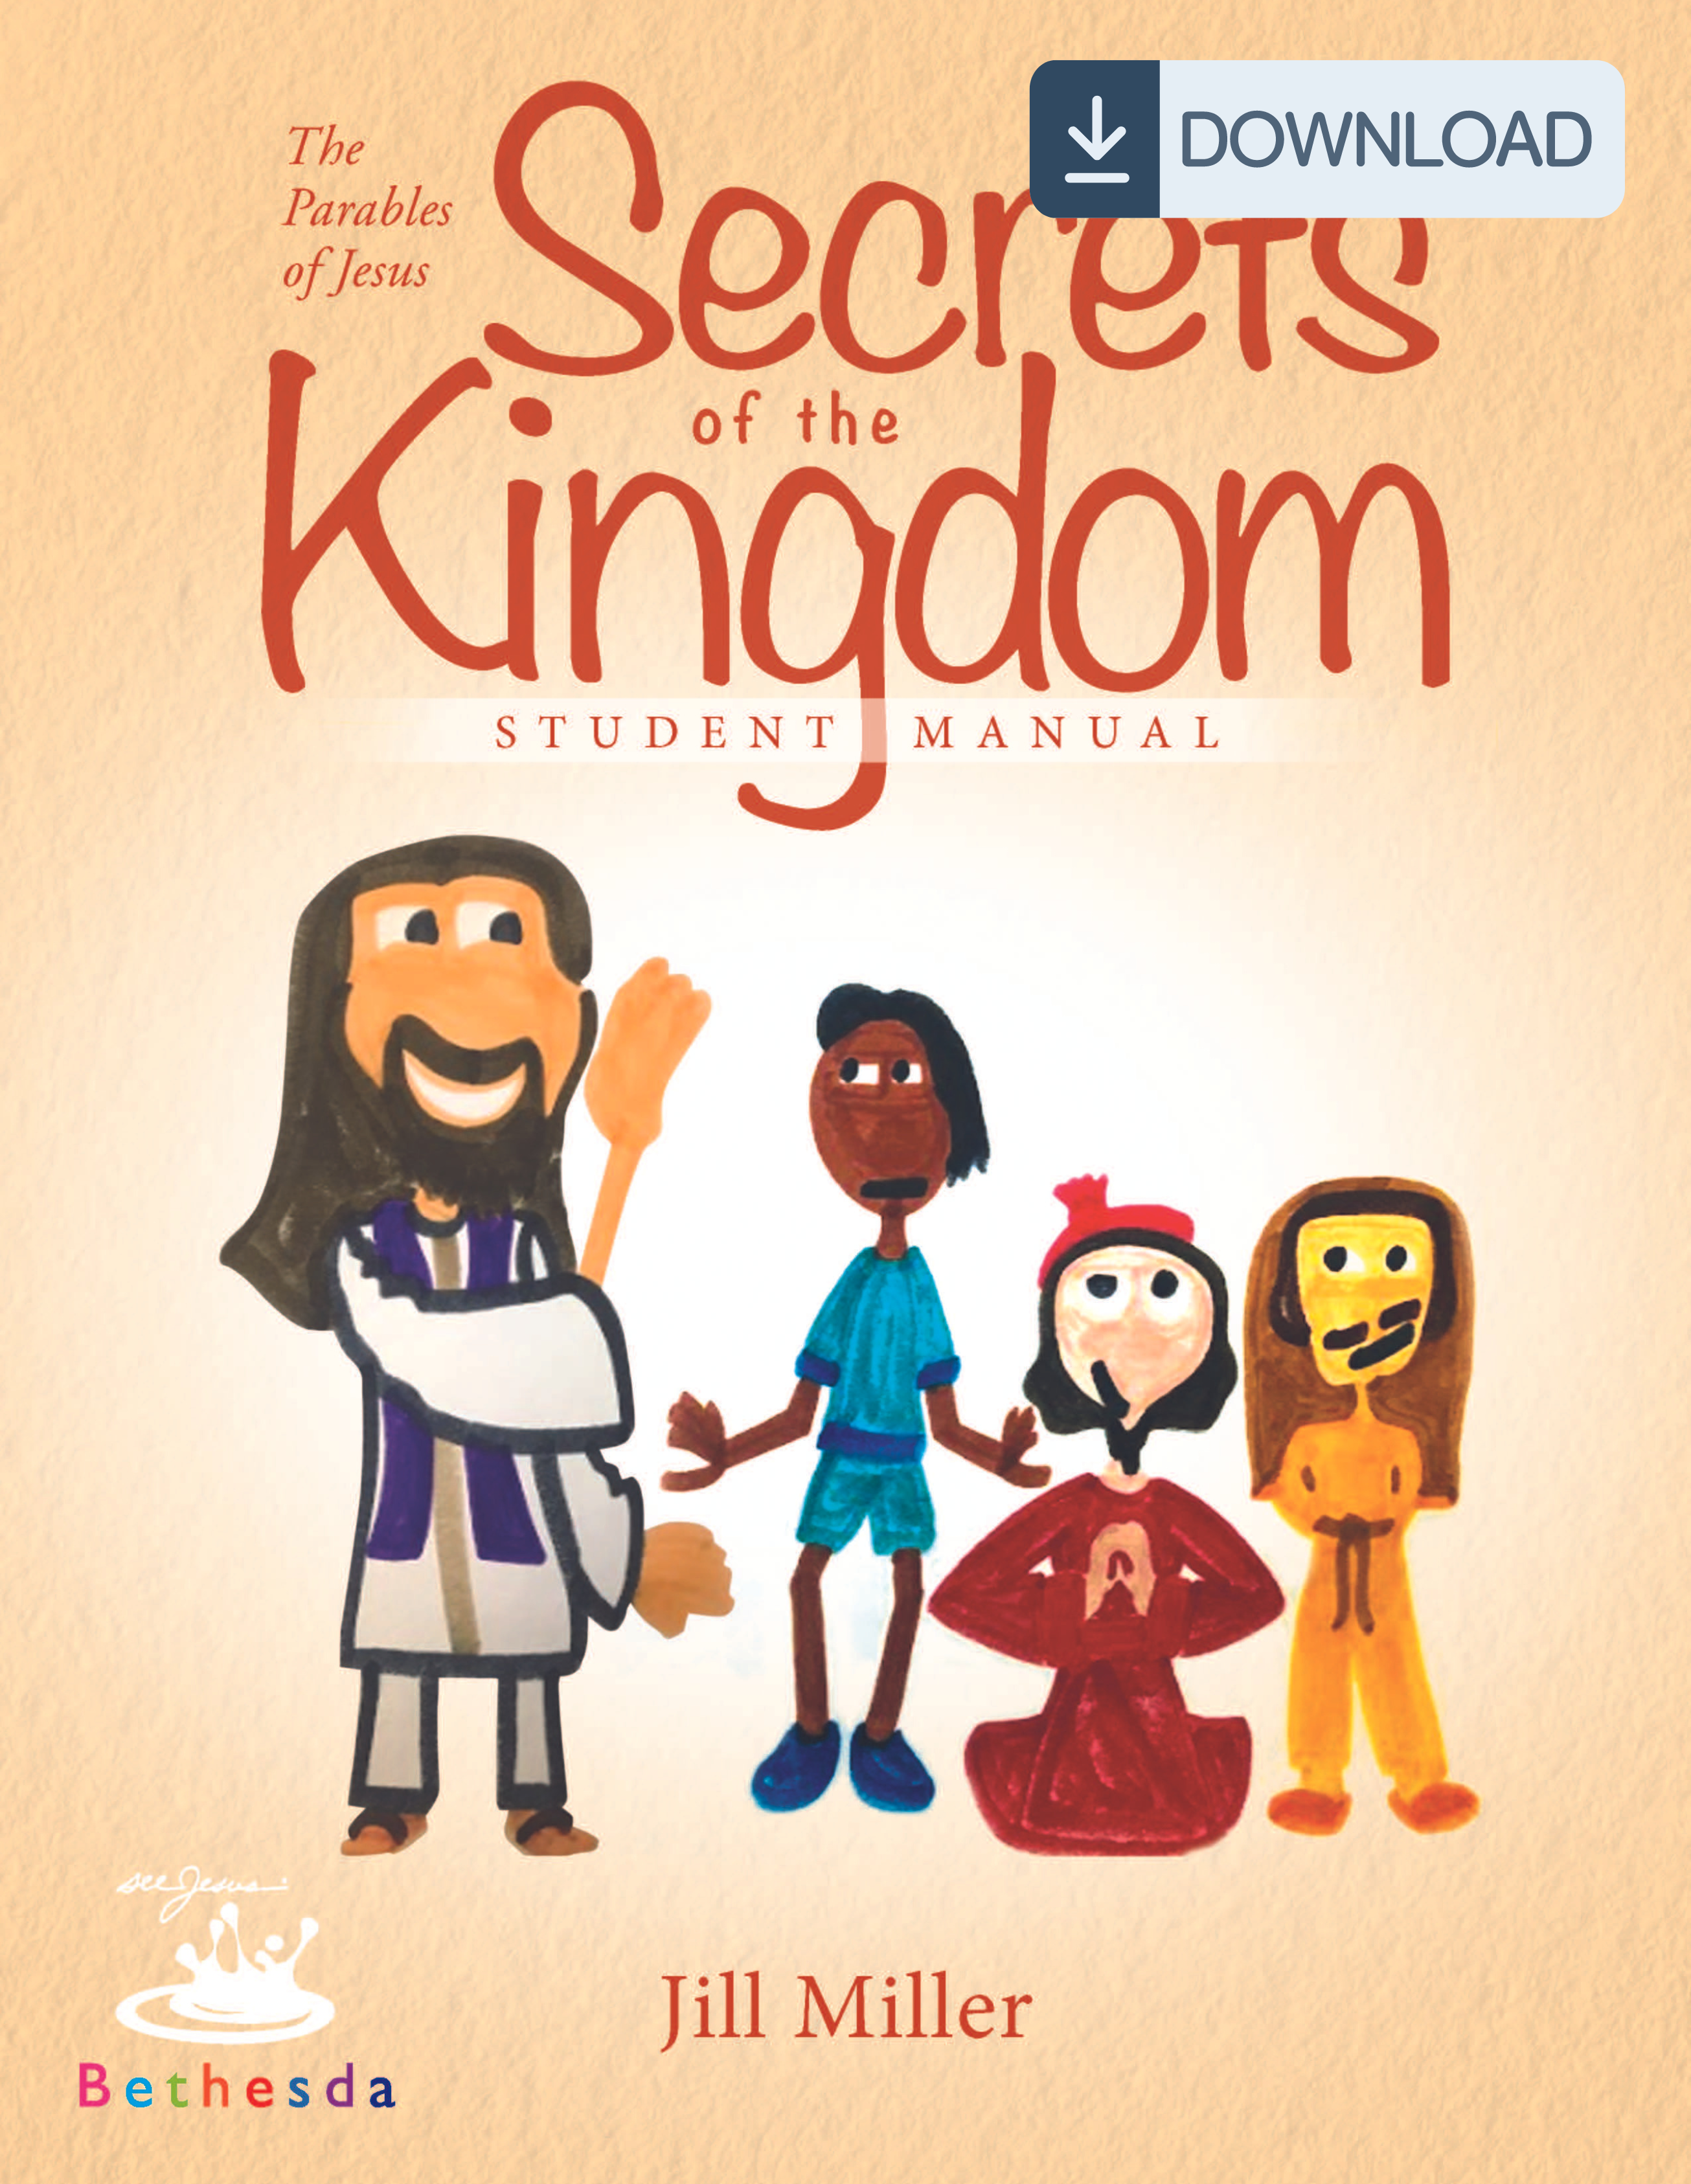 Secrets of the Kingdom Student Manual (PDF)